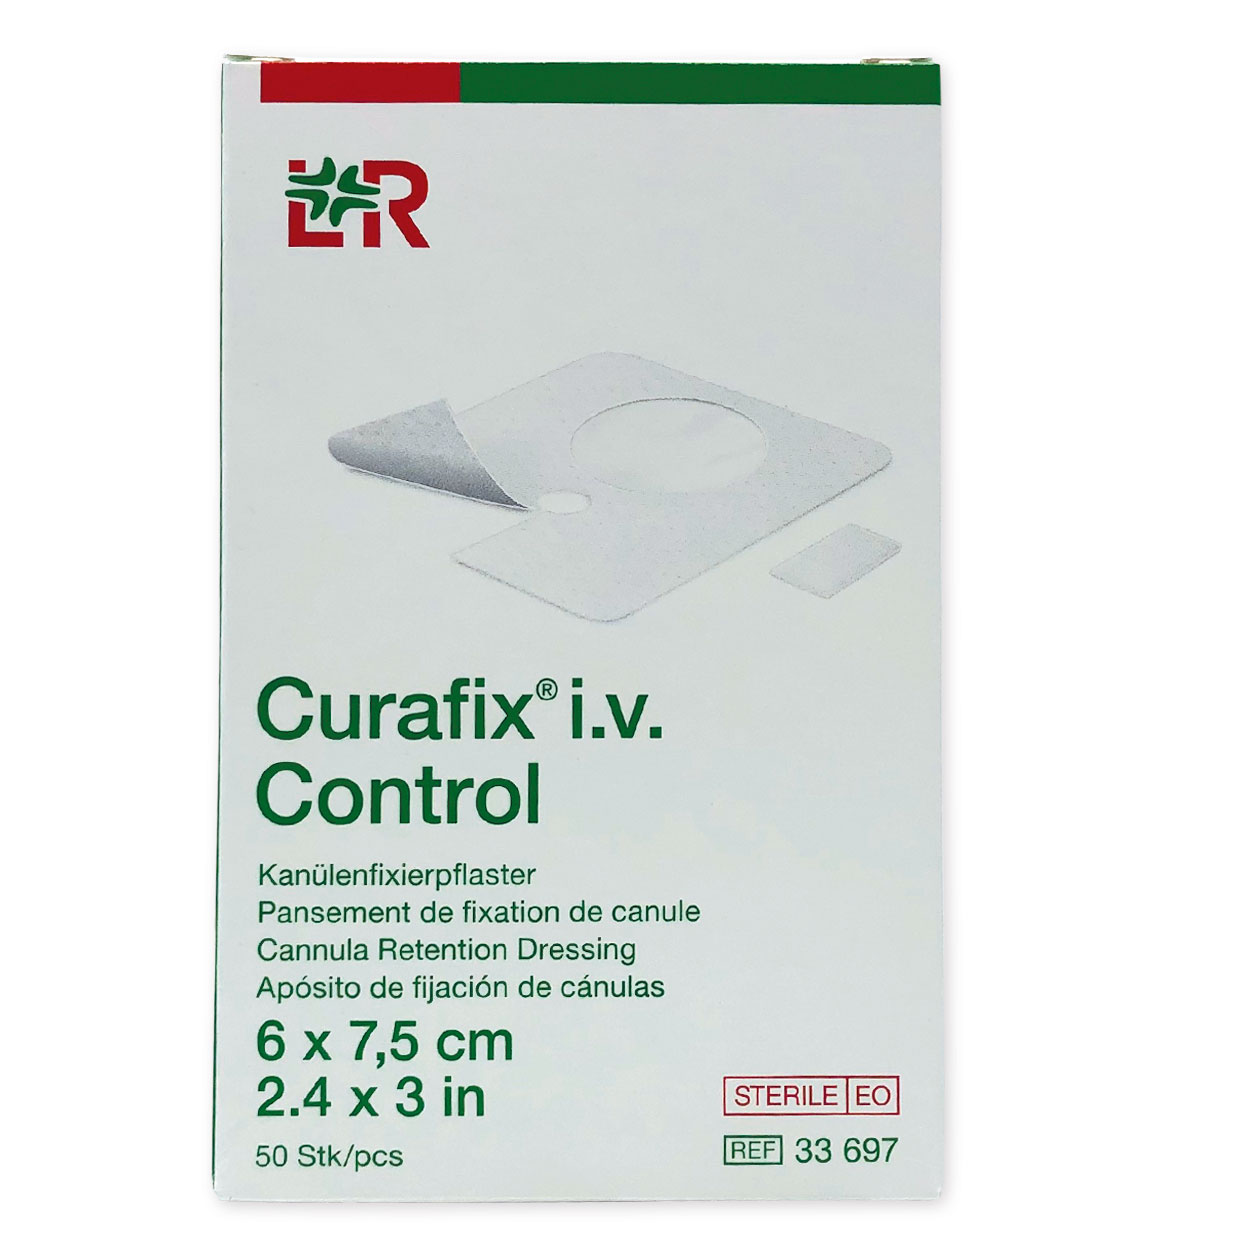 CURAFIX i.v. Control Kanülenfixierpflaster 6 x 7,5 cm - Packung à 50 Stück